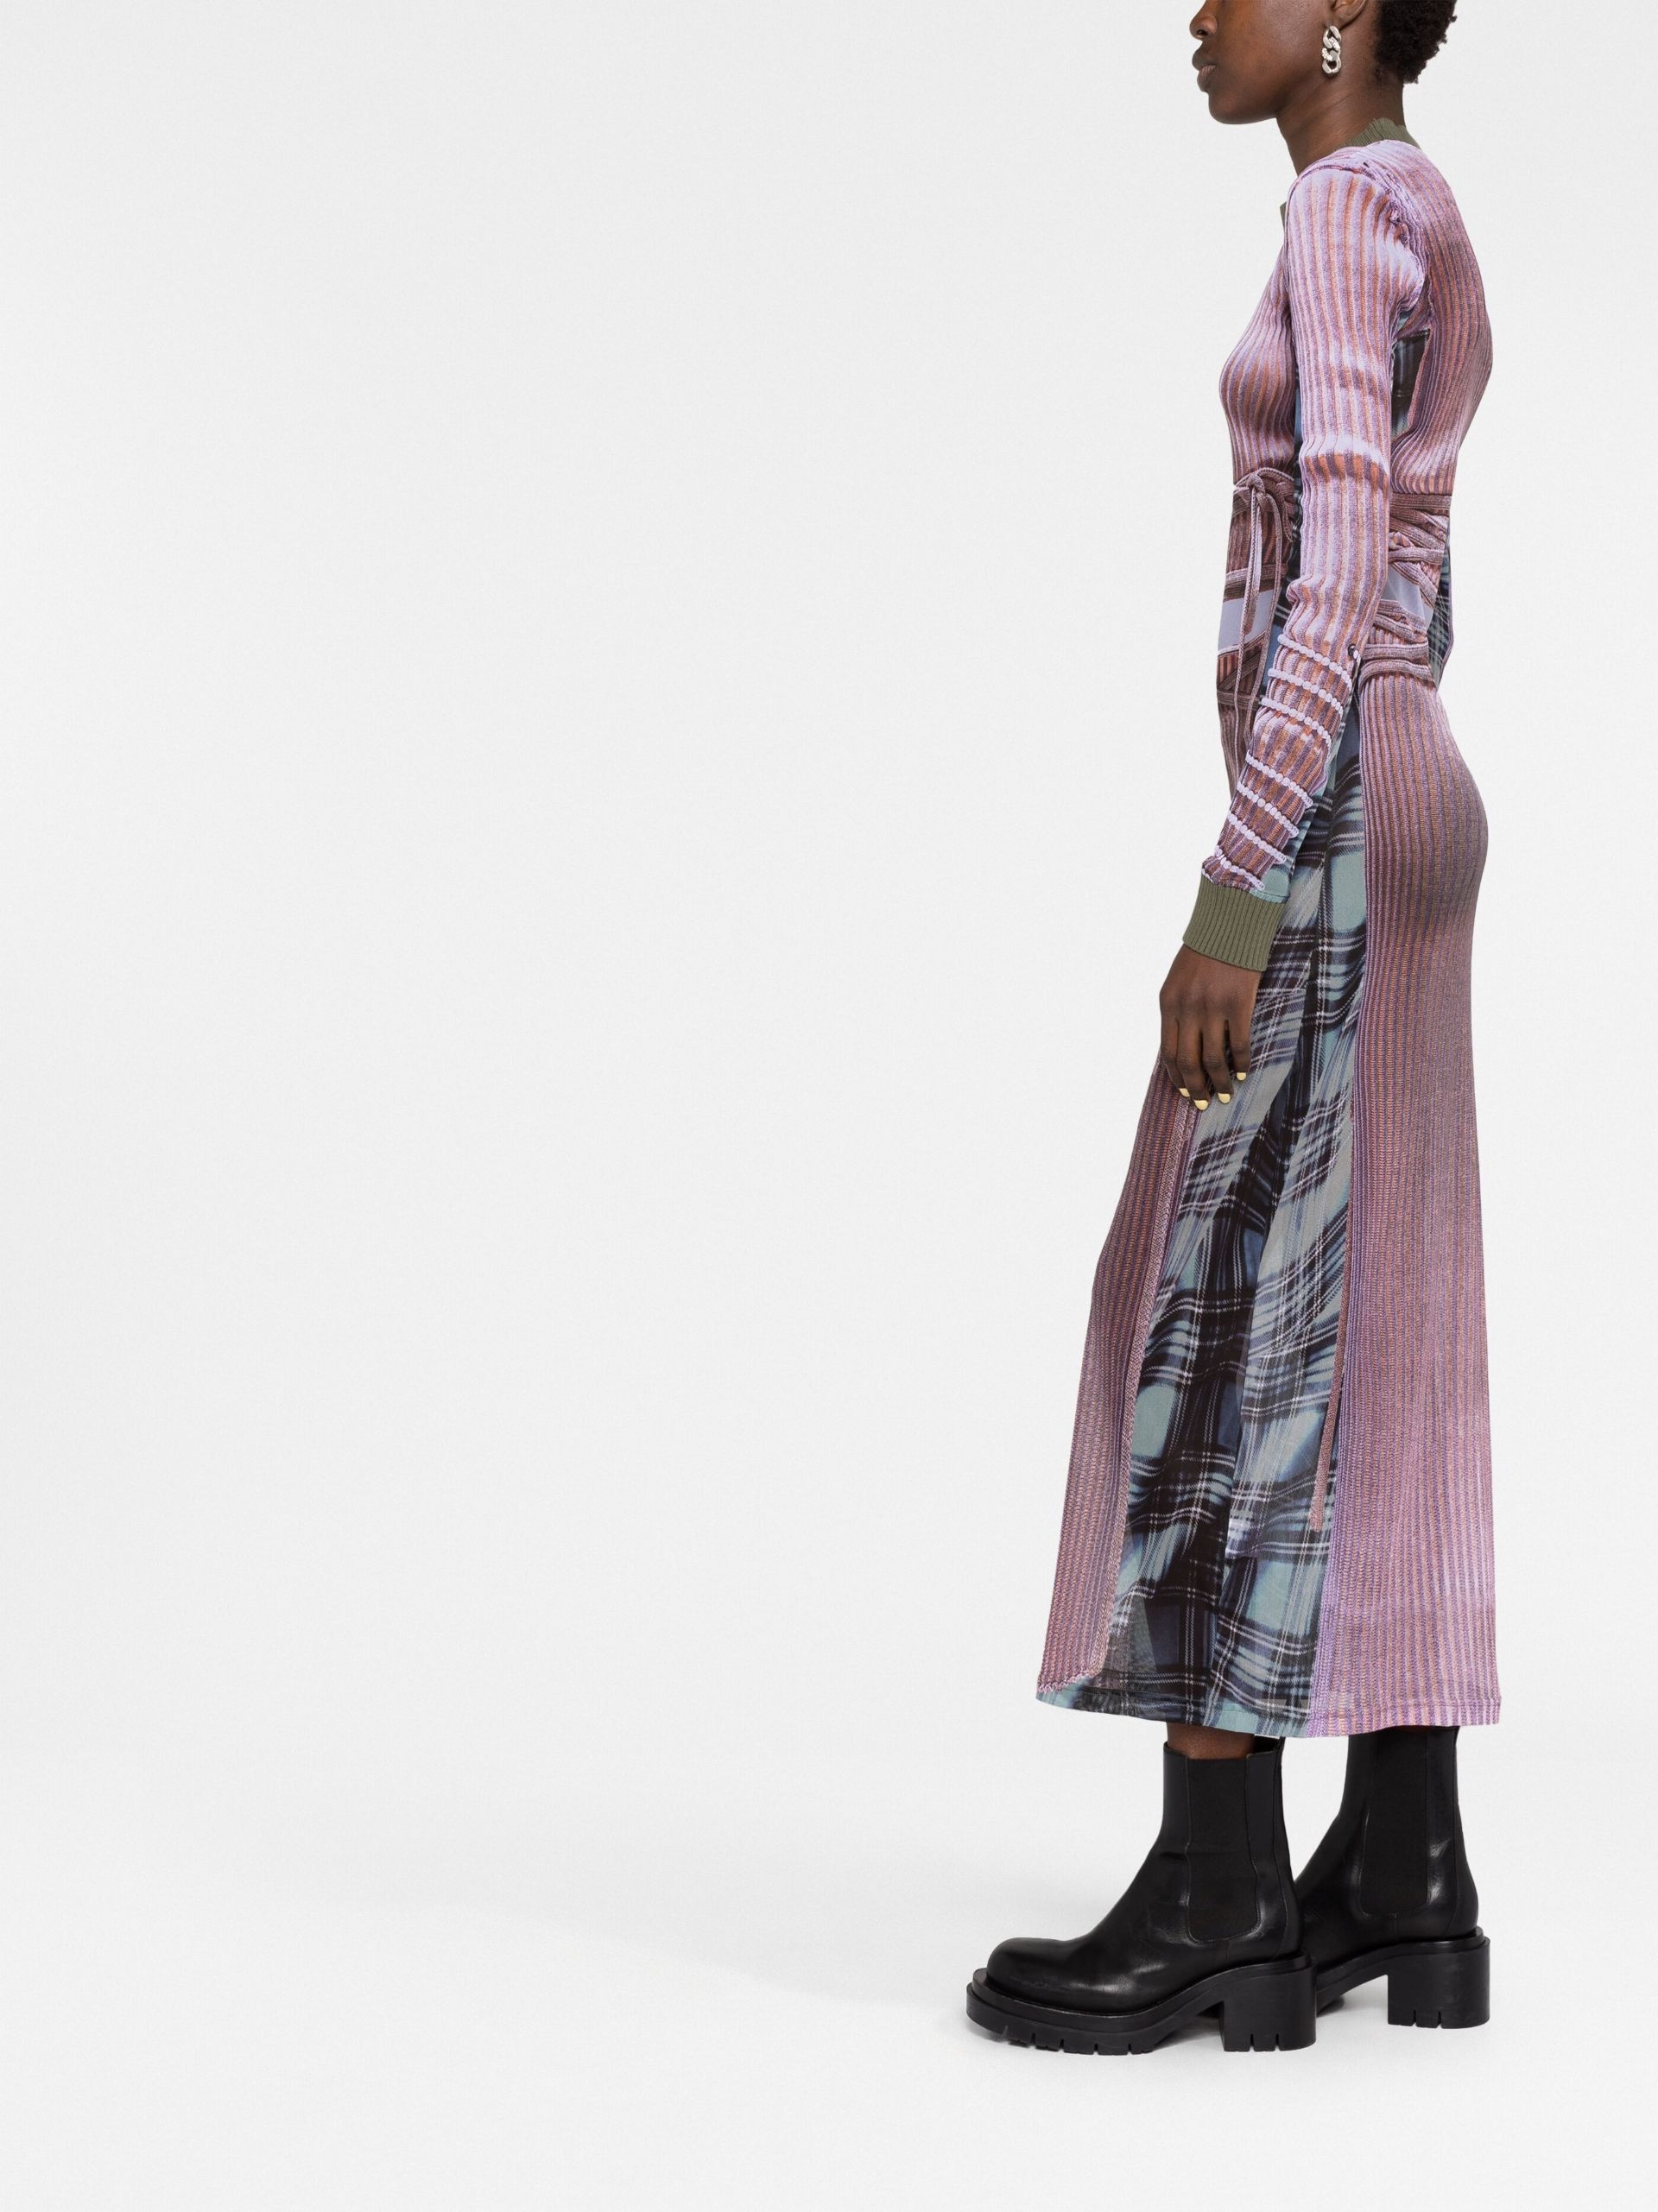 x Jean Paul Gaultier Trompe L'oeil printed dress - 5